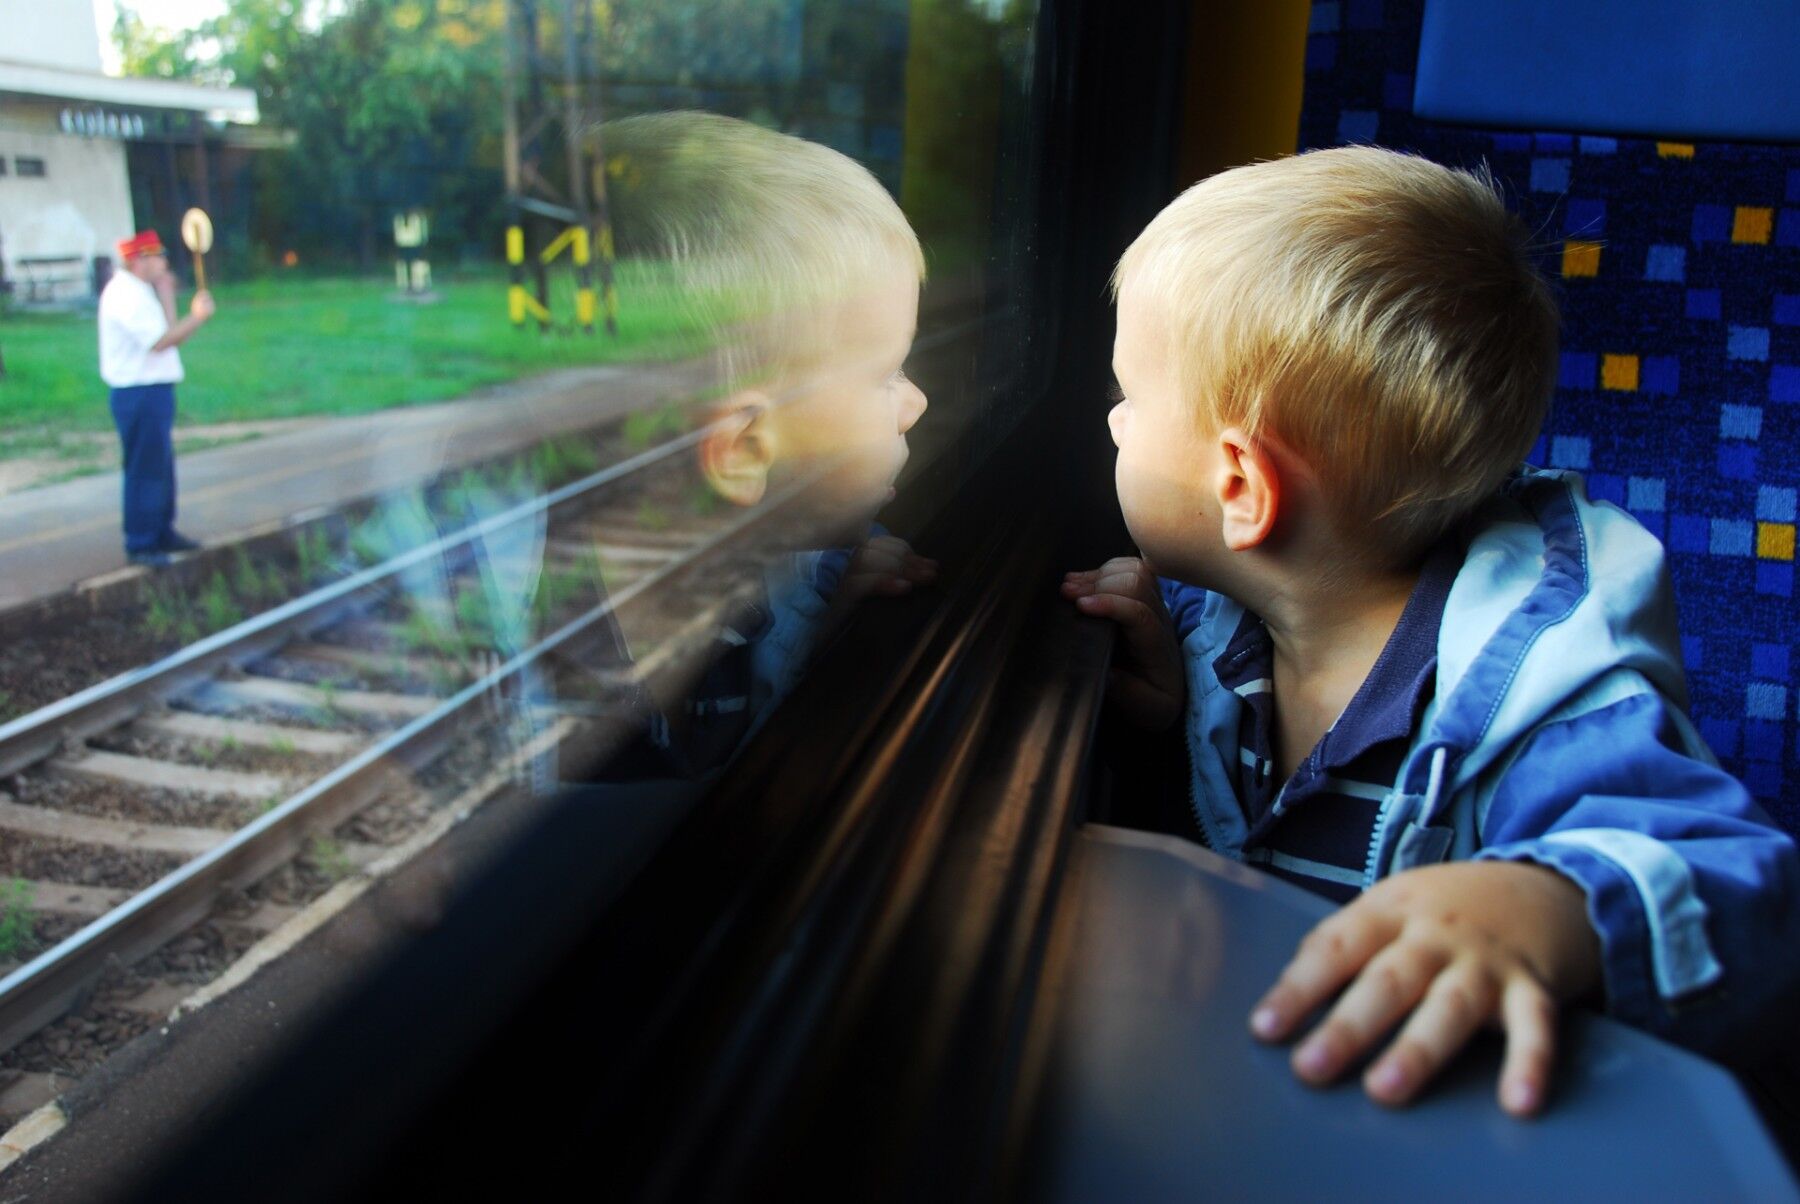 cestovani vlakem s detmi, interrail